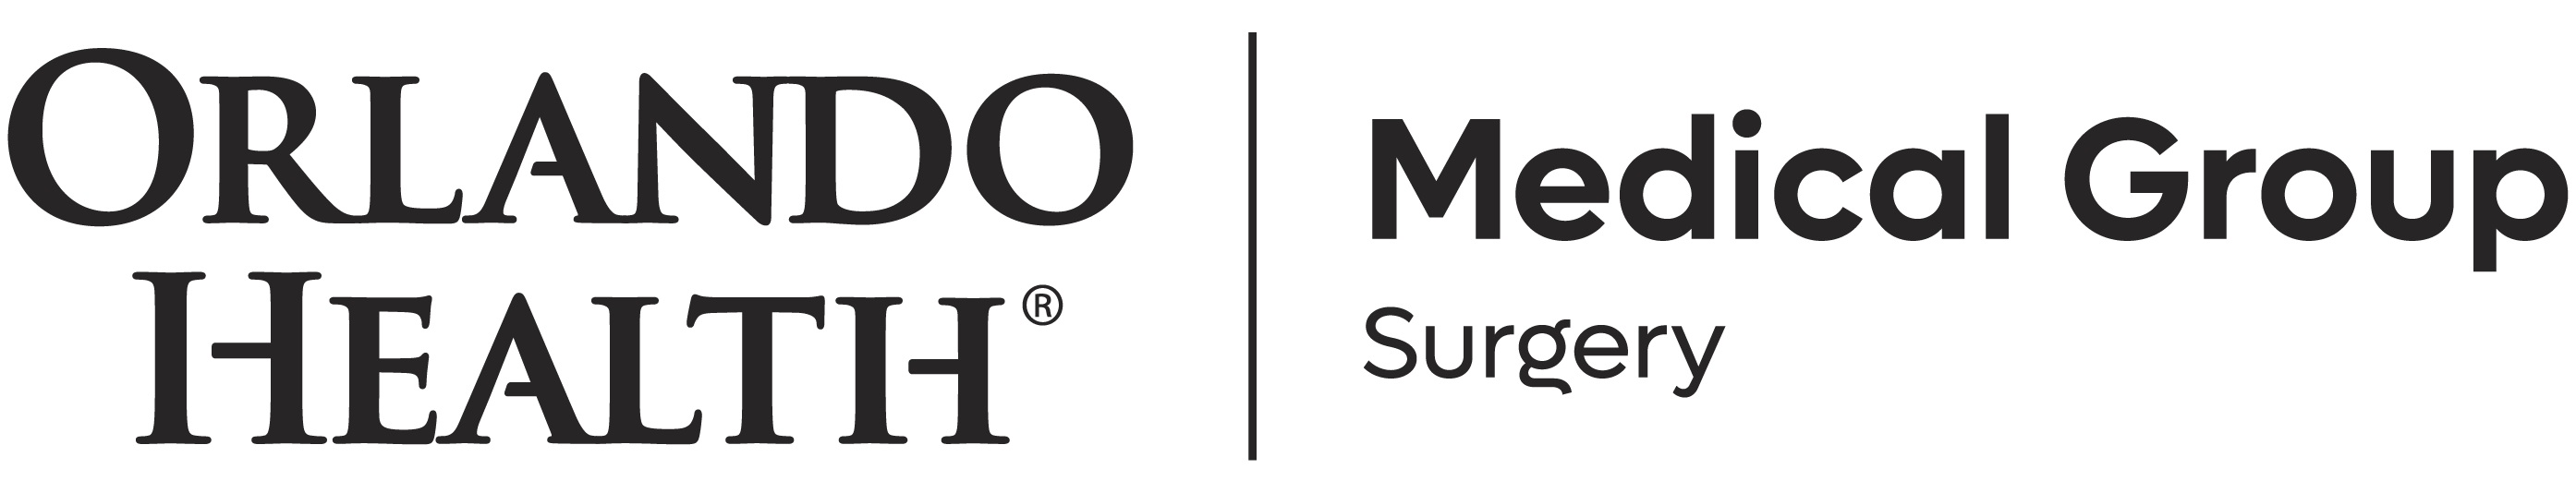 Orlando Health Medical Group Surgery